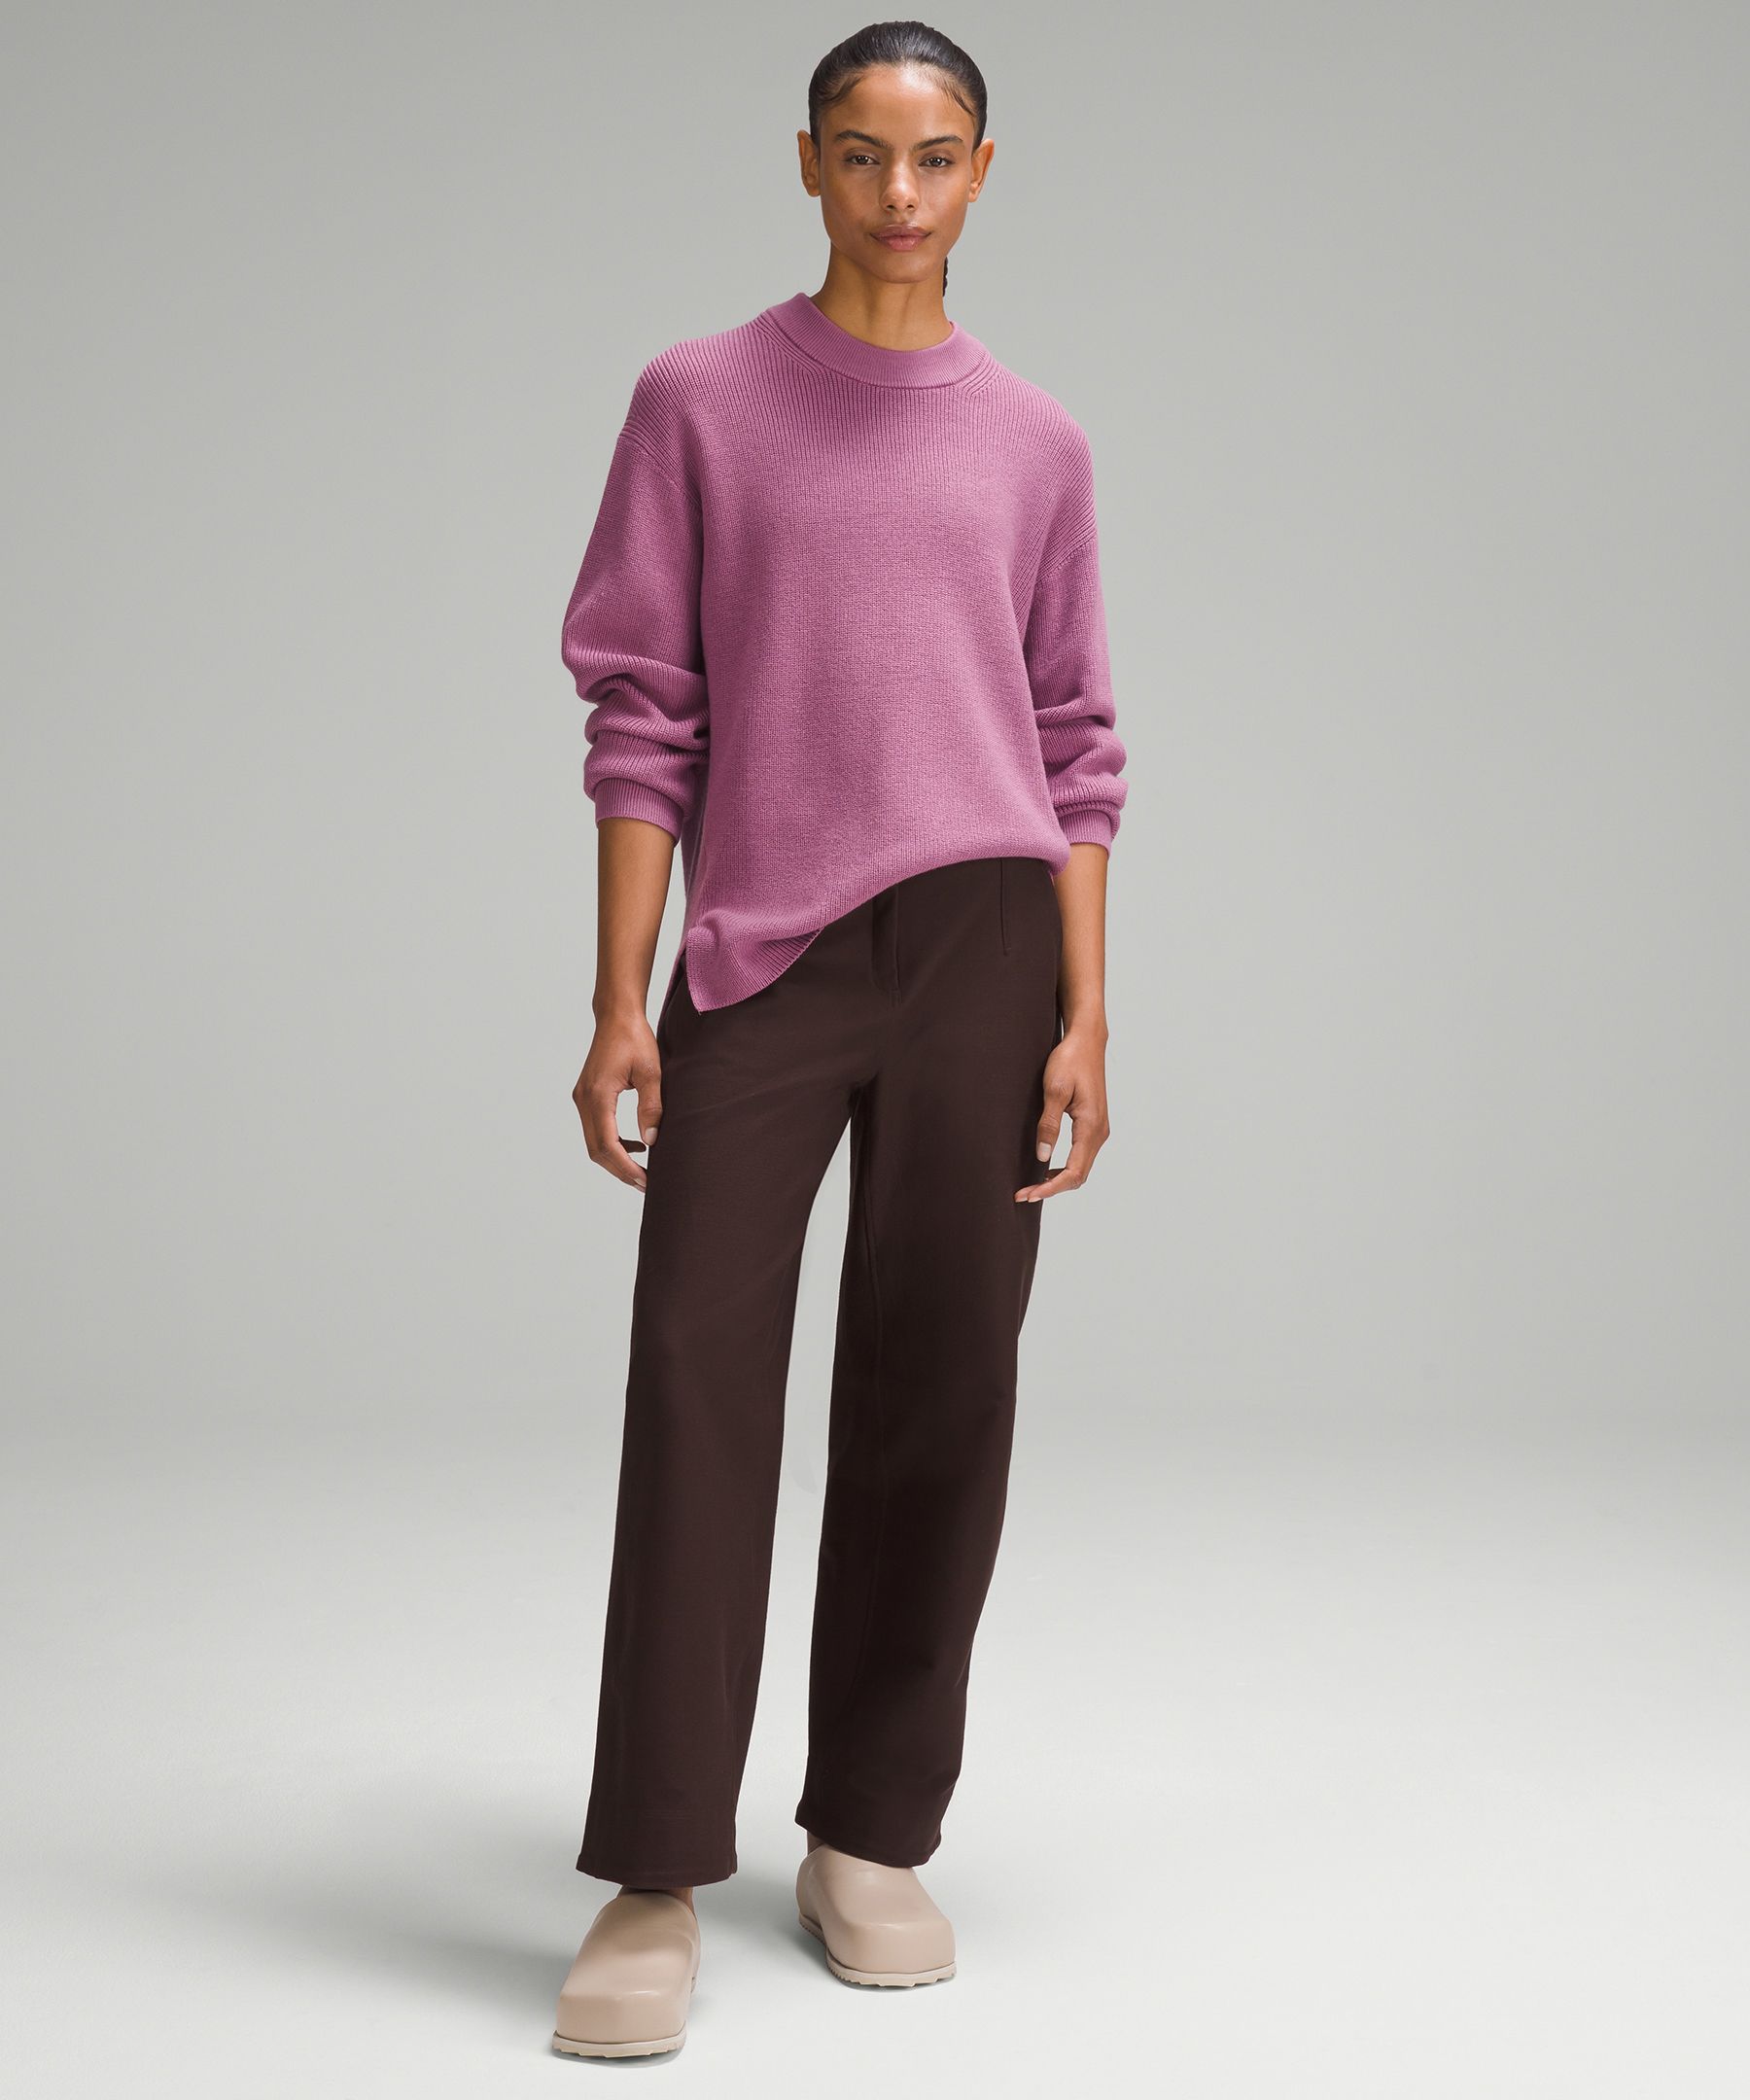 Lululemon Crew Neck Sweatshirt Black Size 8 - $58 (50% Off Retail) - From  Jade